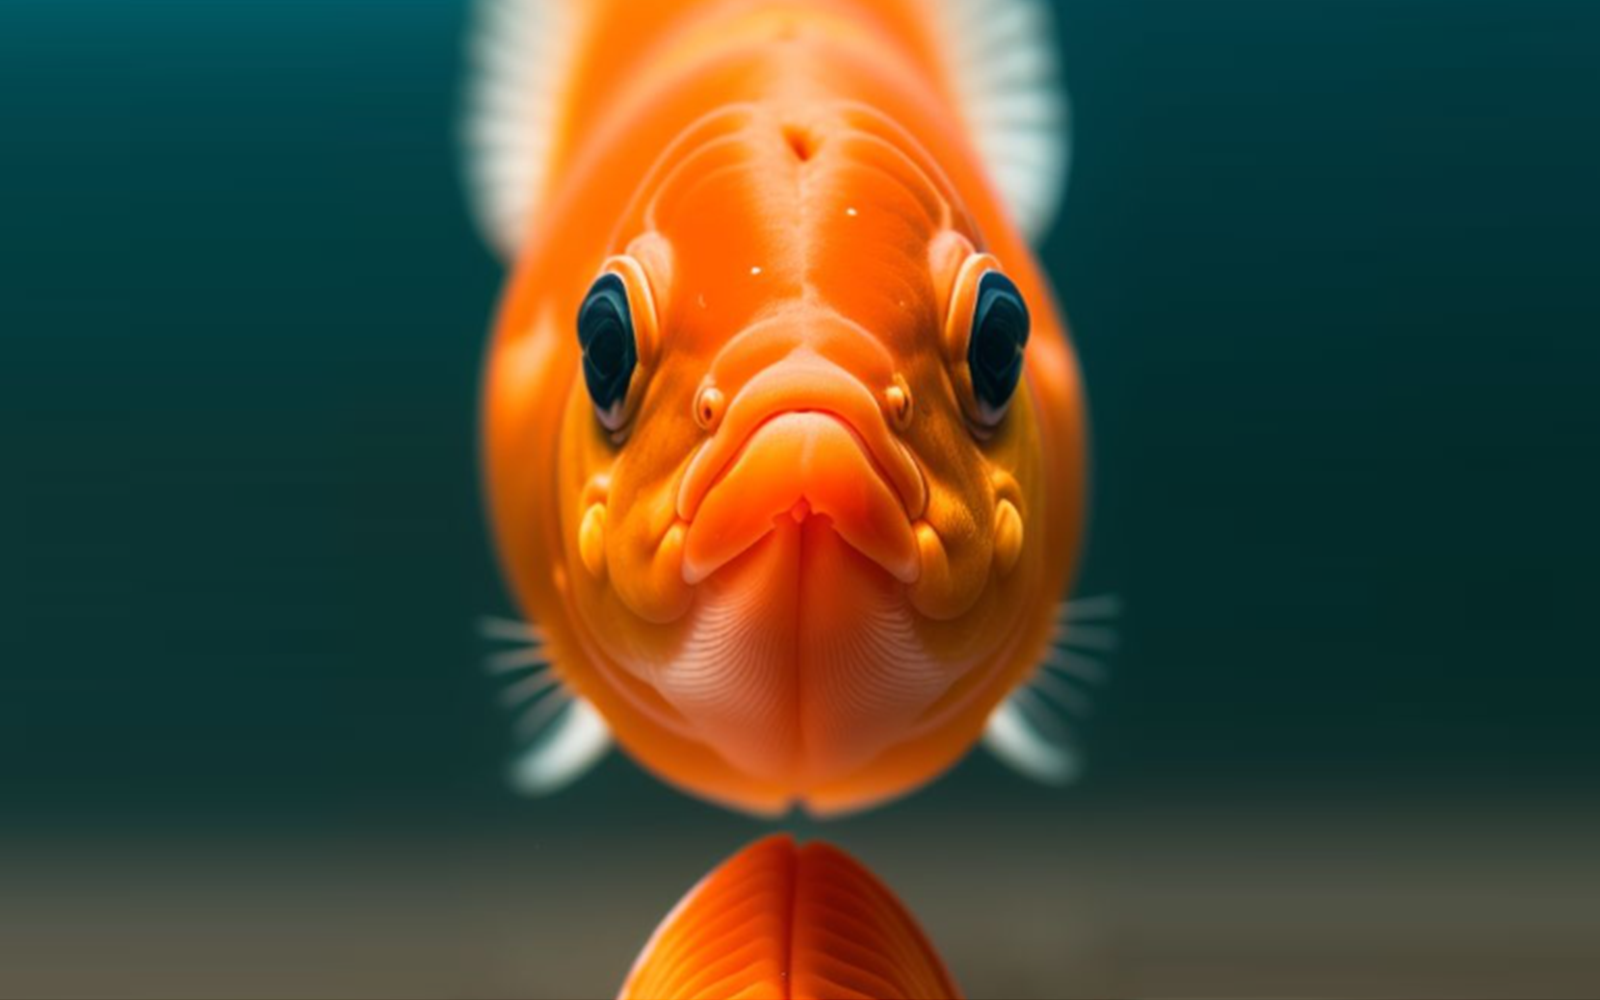 A Goldfish staring at you